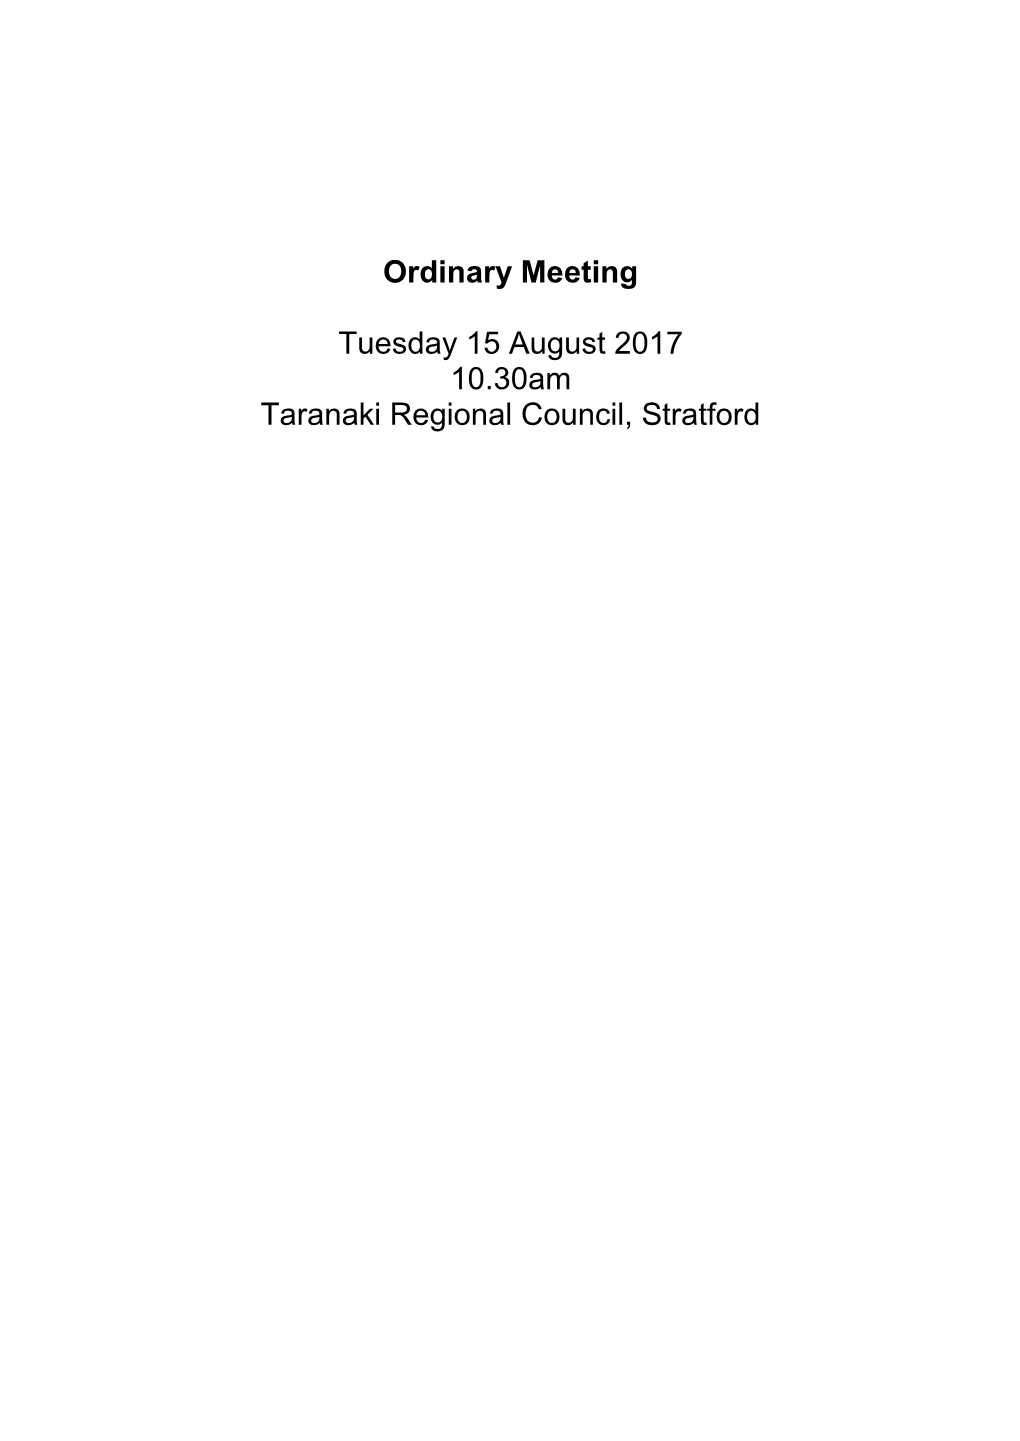 Ordinary Council Meeting Agenda July 2017